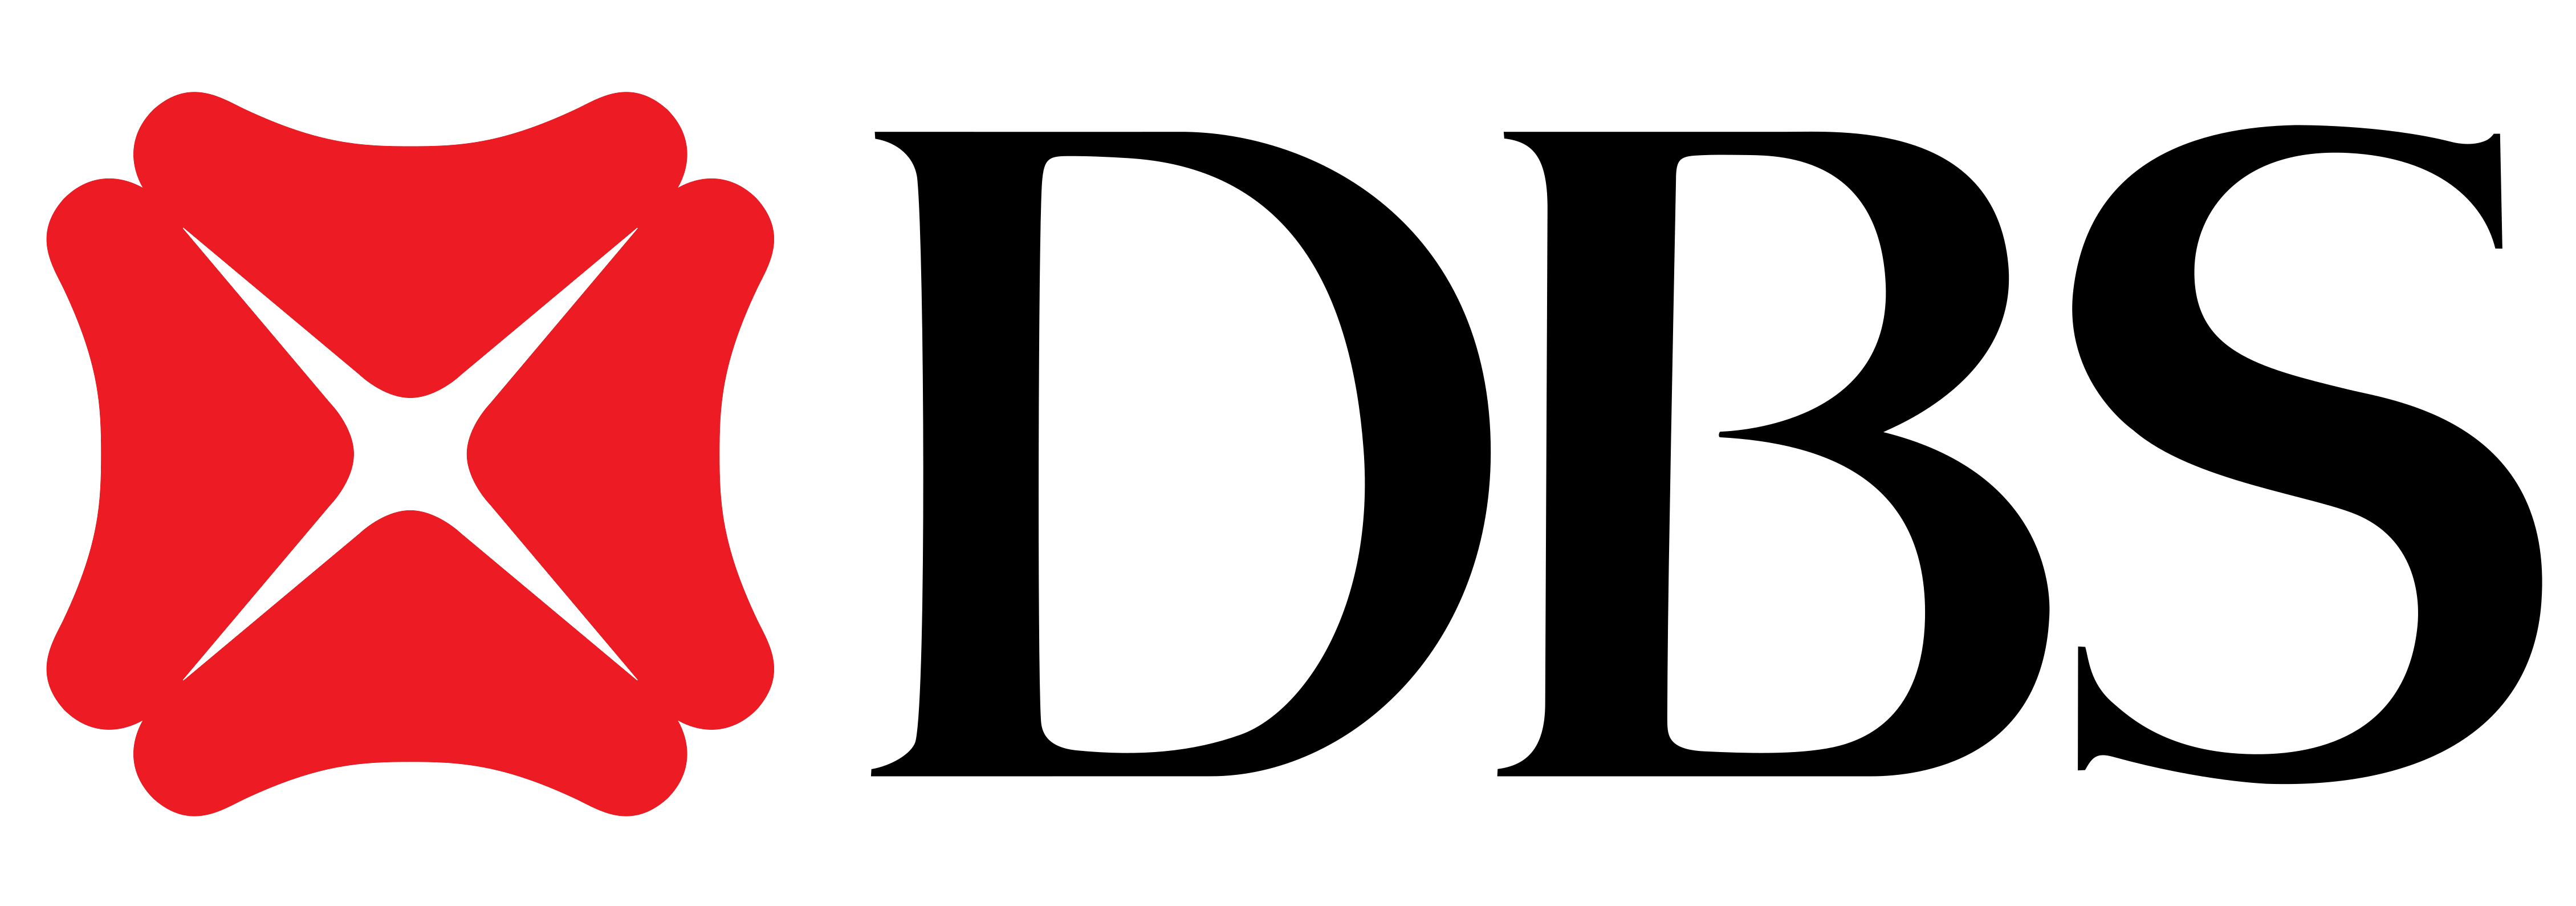 Dbs Logo PNG